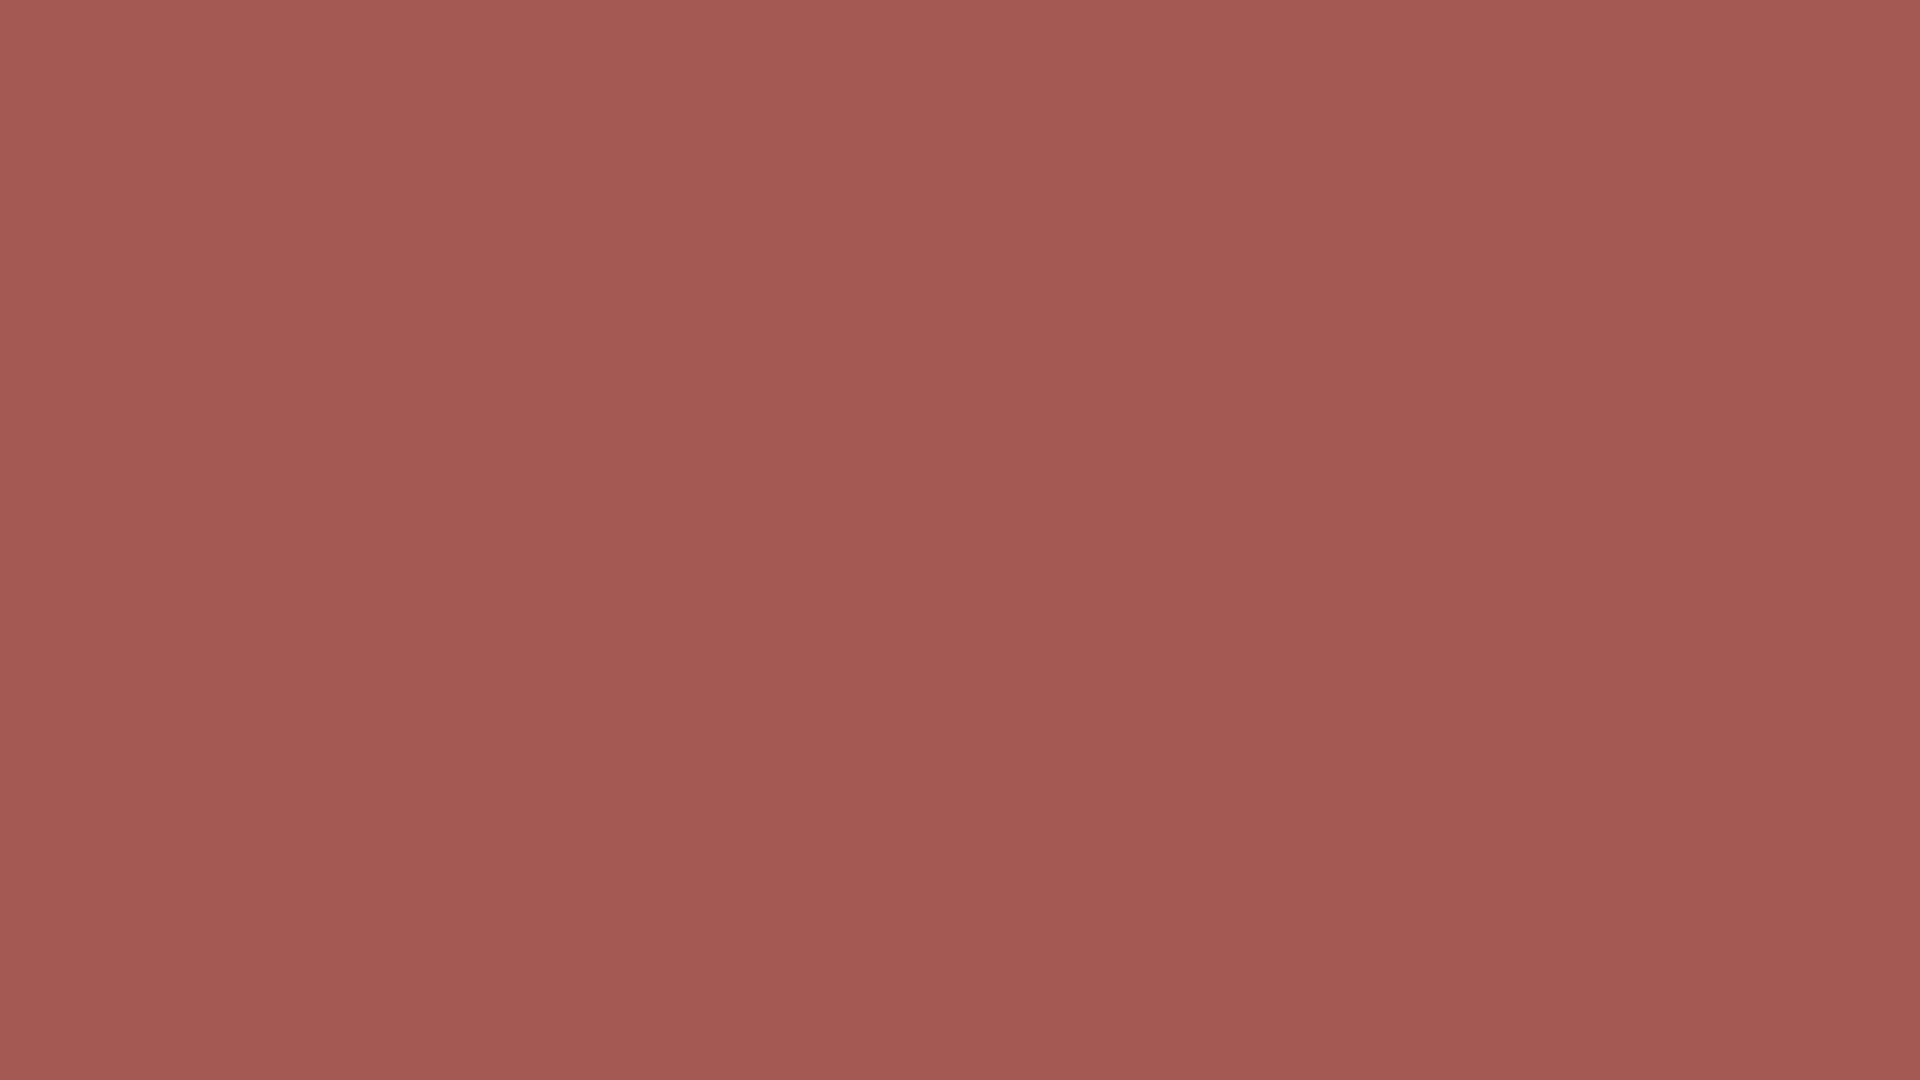 1920x1080 Redwood Solid Color Background